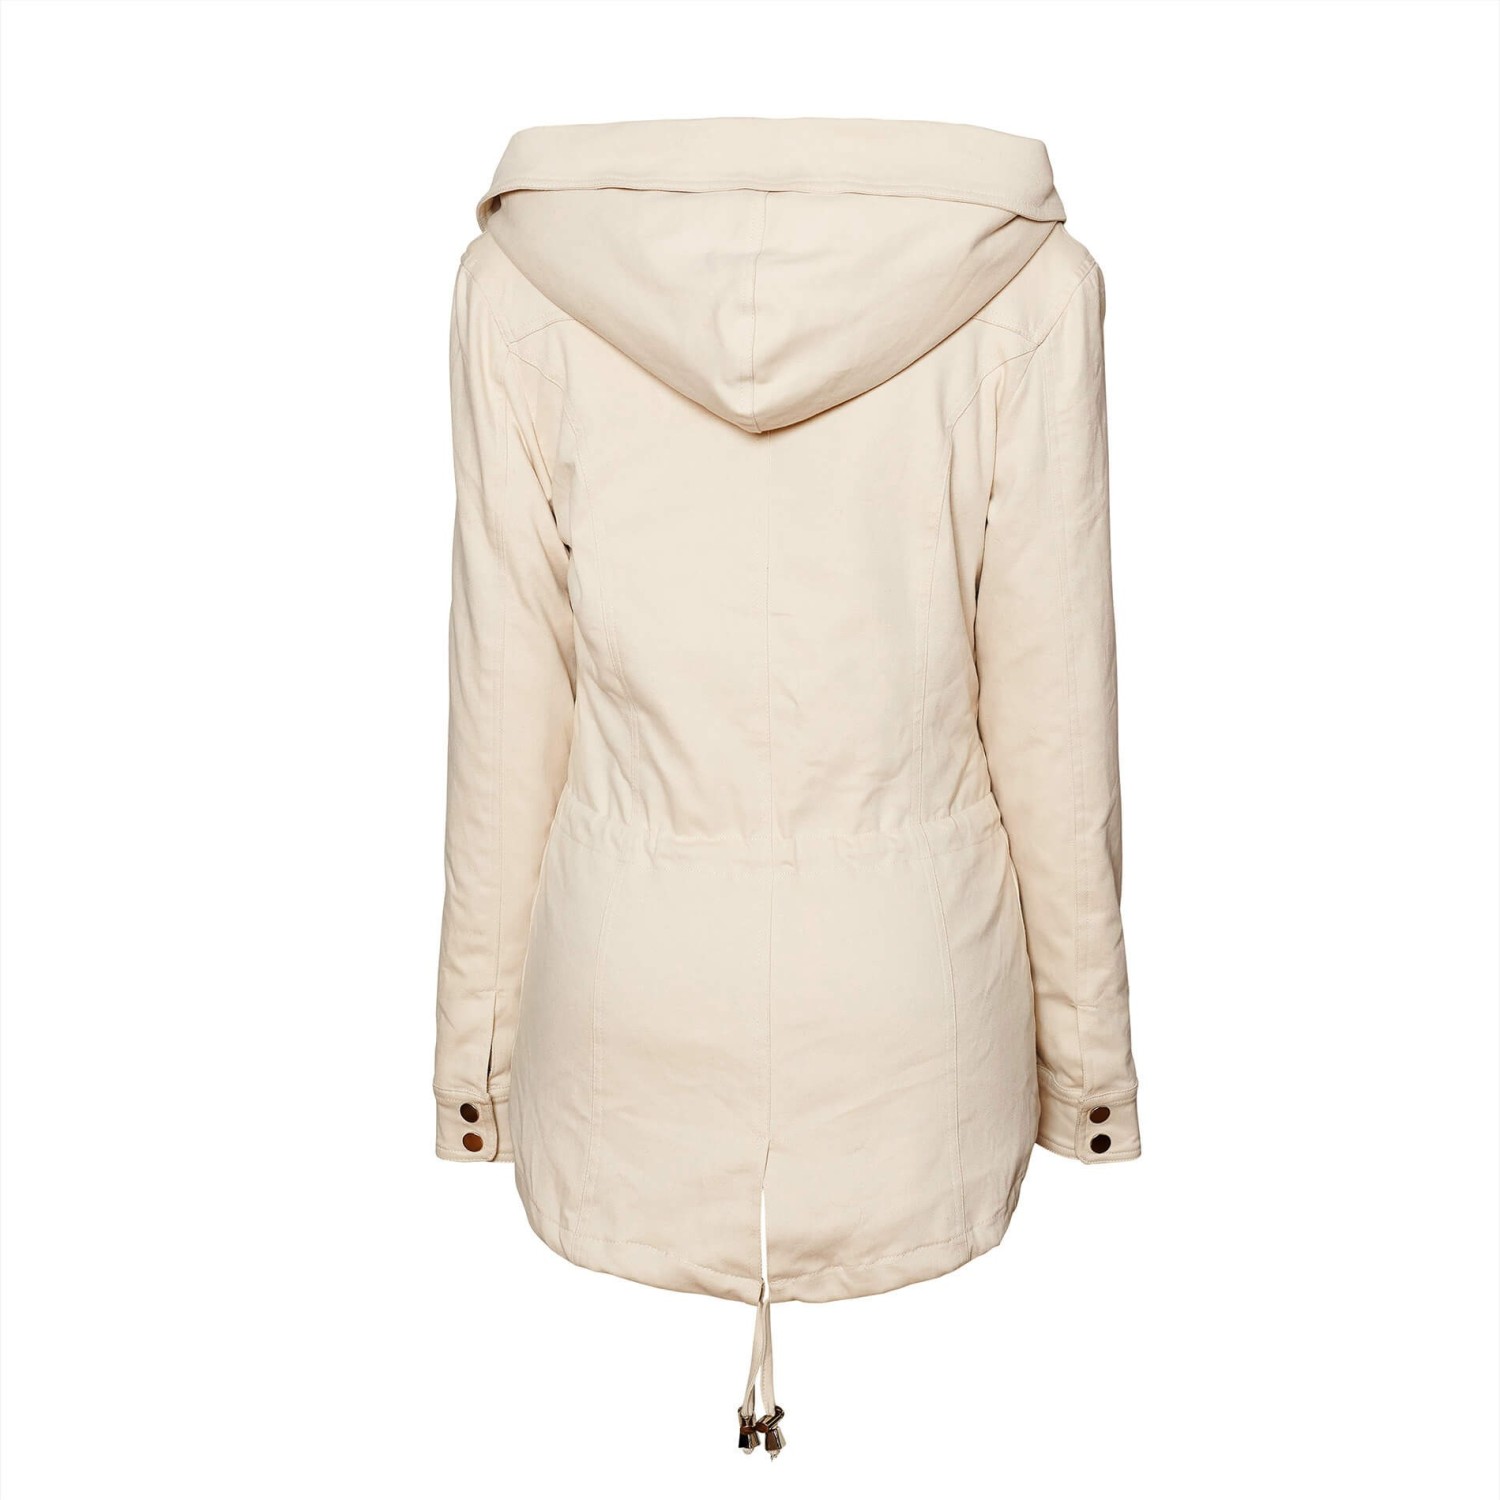 Jacket with Fur Hood "PETITE" in Cream, Parka, white, Realfur